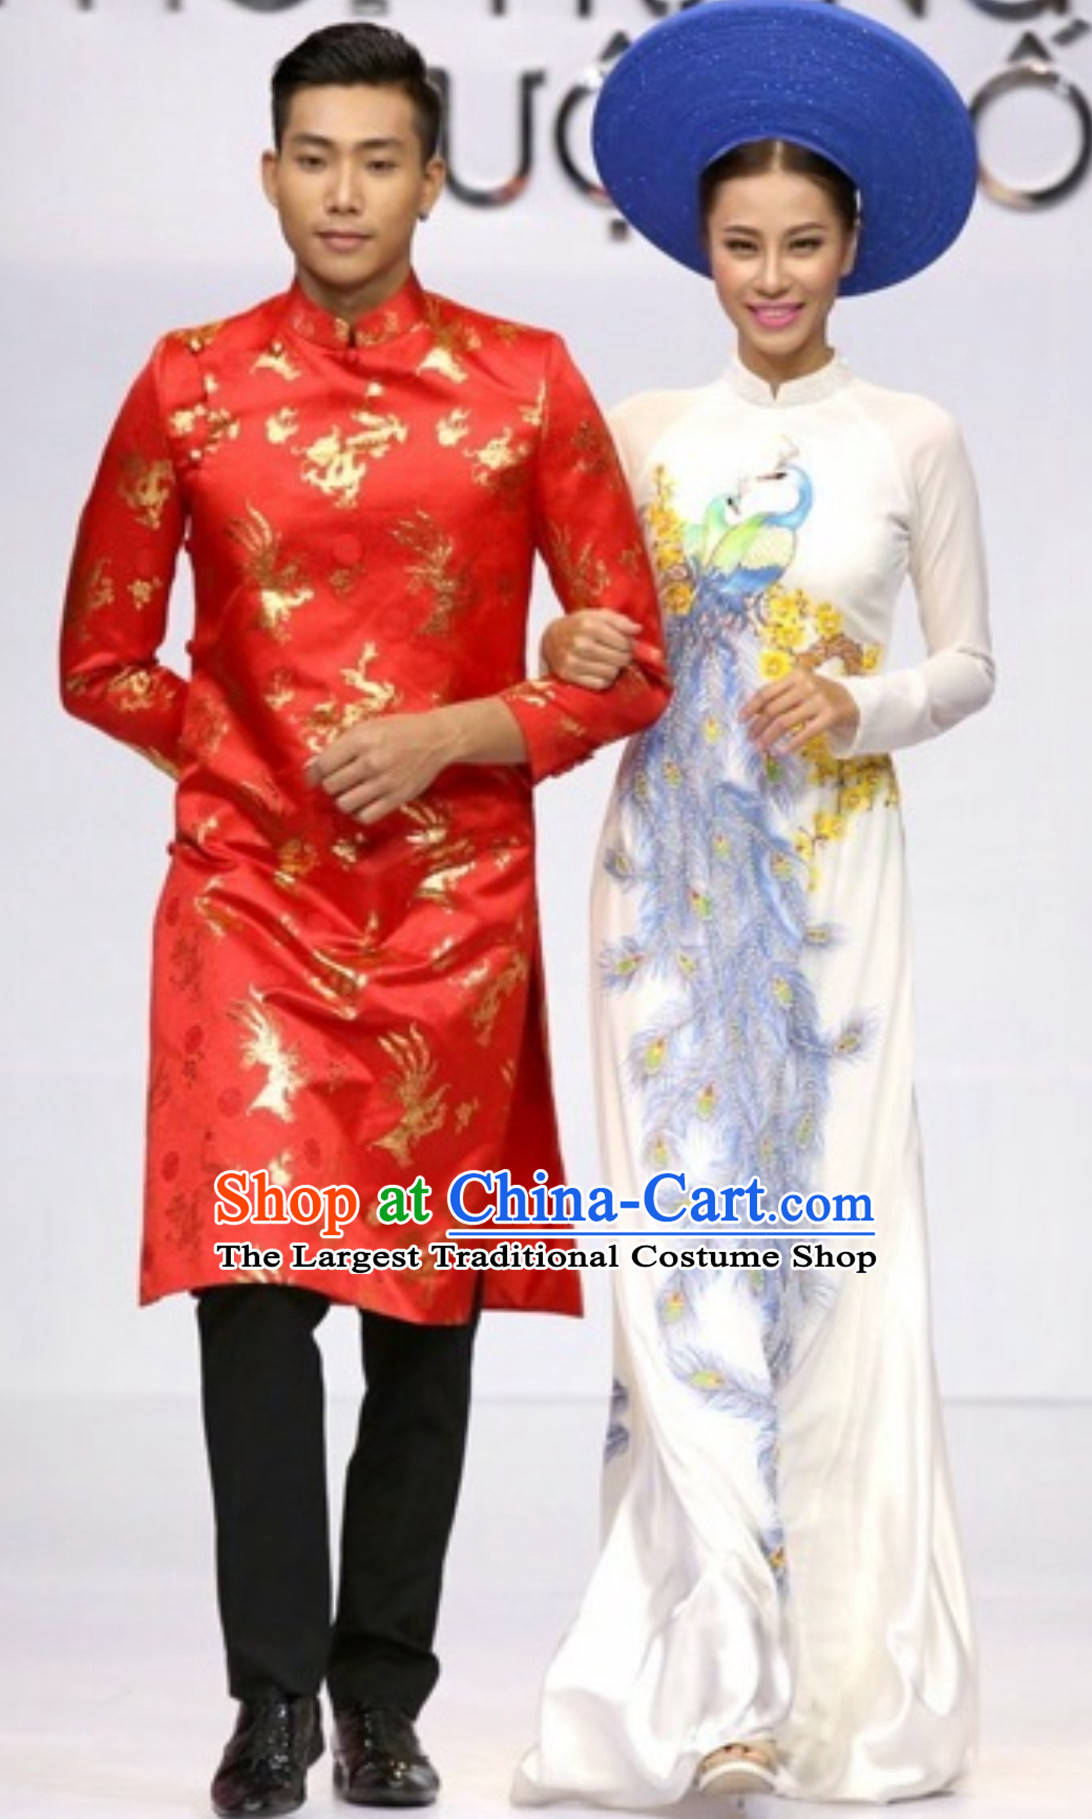 Top Traditional Vietnam Wedding Dresses Complete Set for Bride and Bridegroom